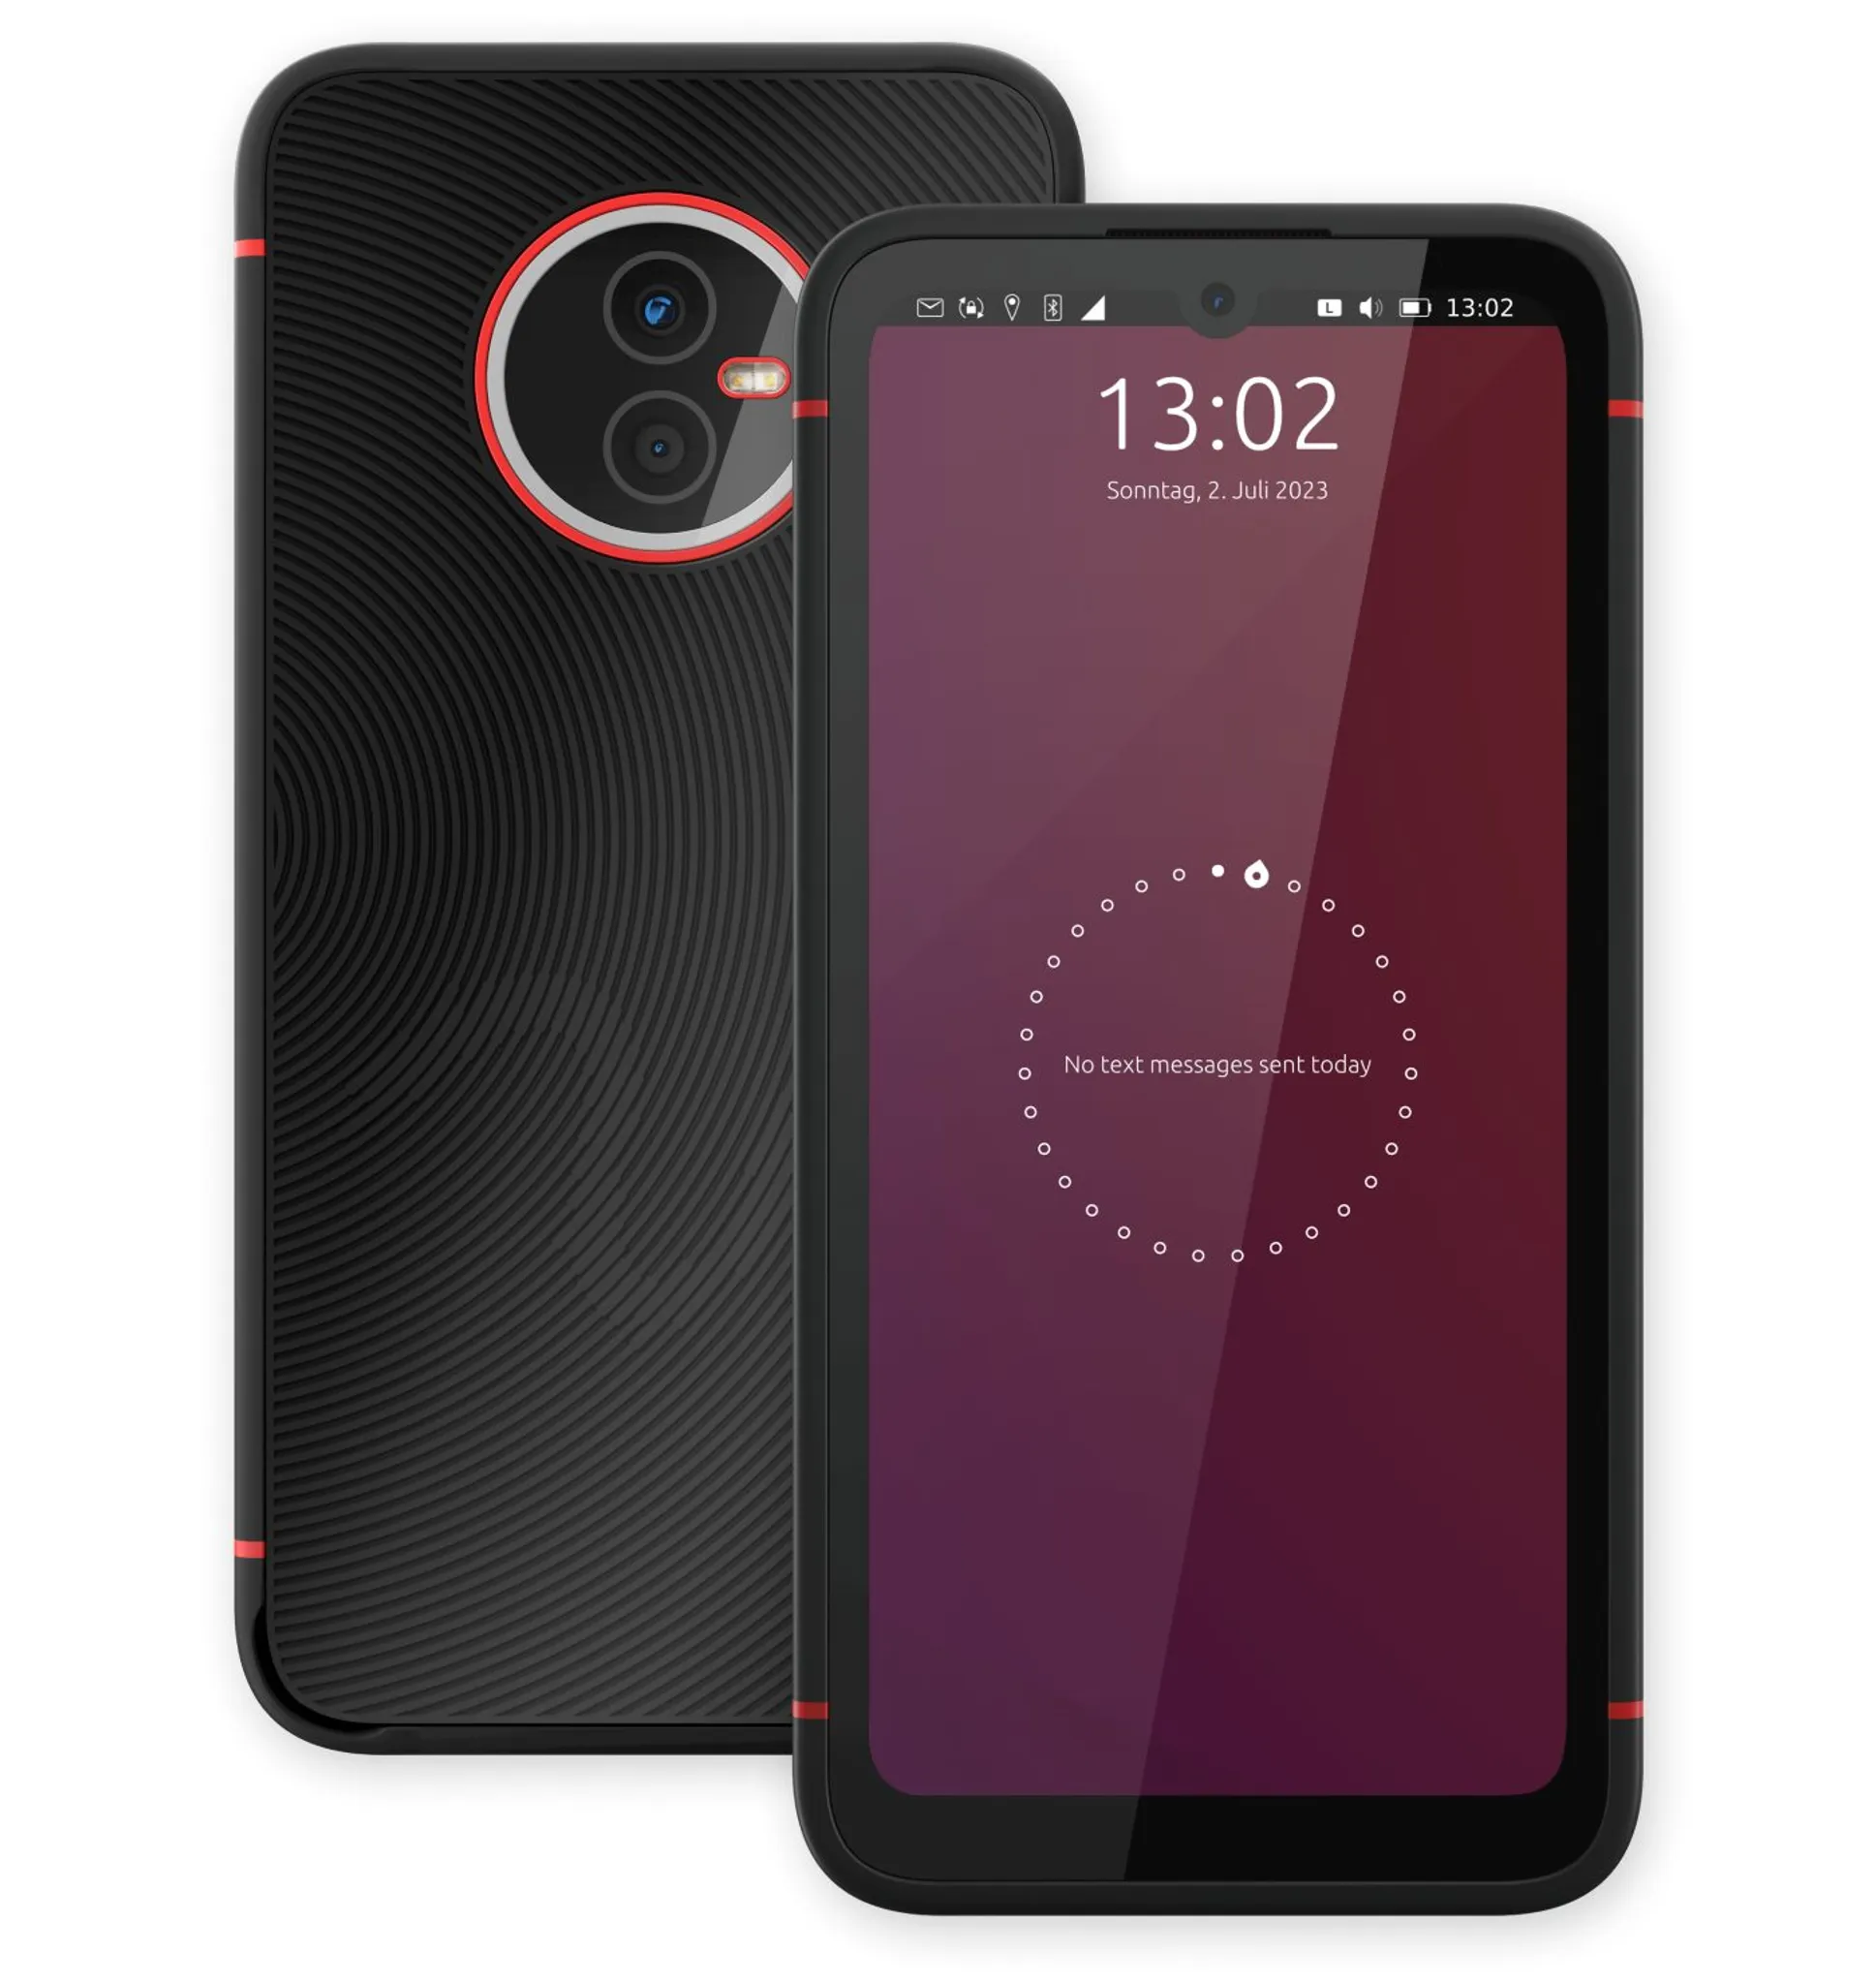 Volla Phone X23 Smartphone mit Ubuntu Touch –